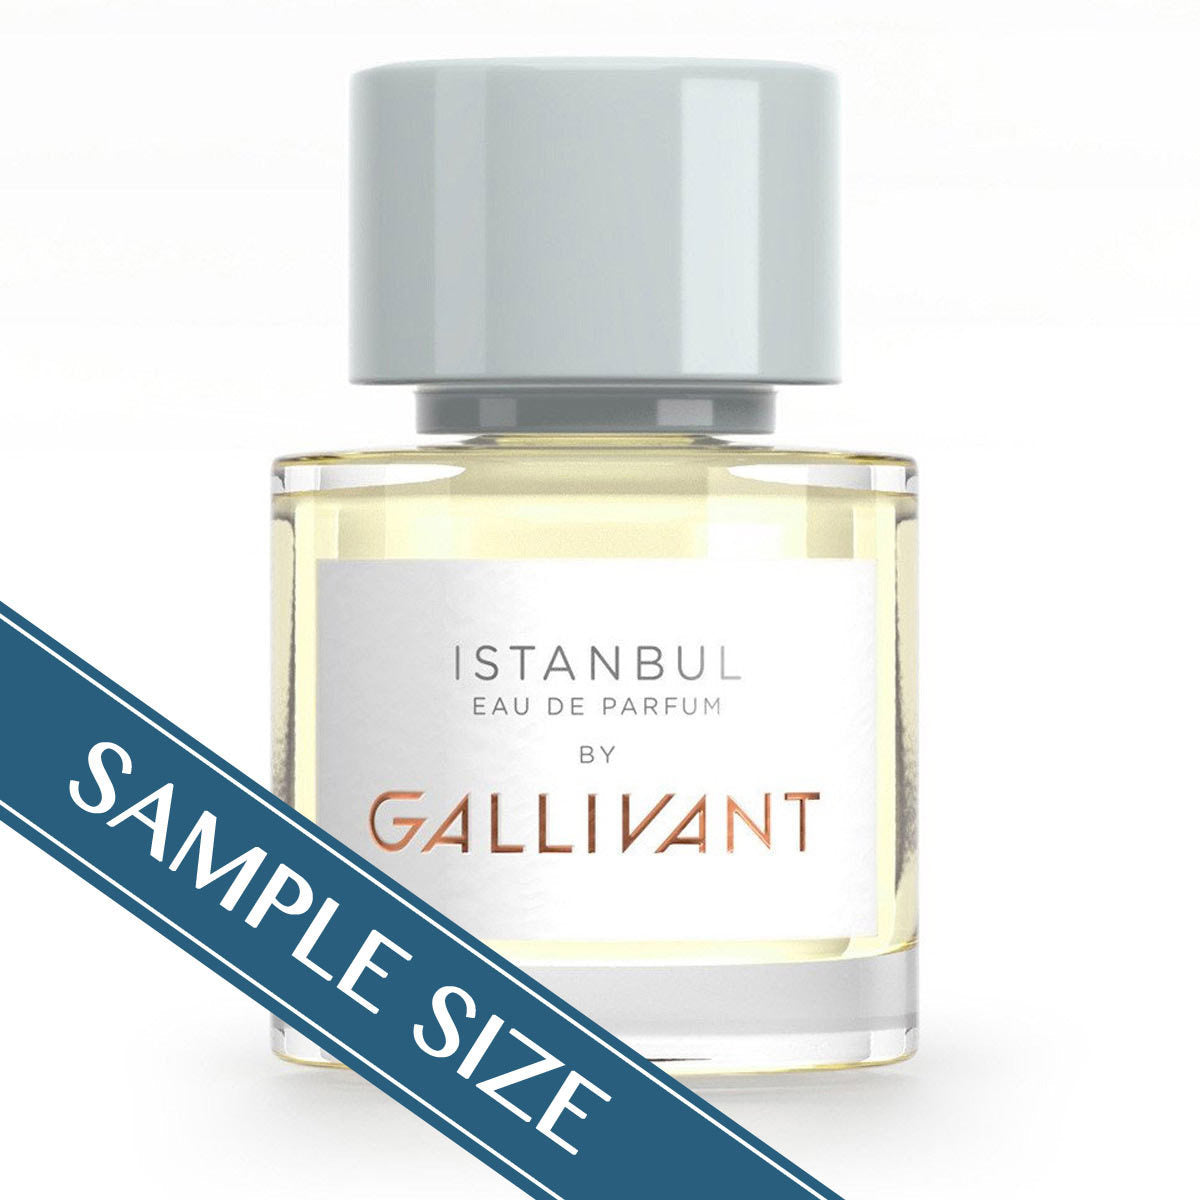 Primary image of Sample - Istanbul Eau de Parfum